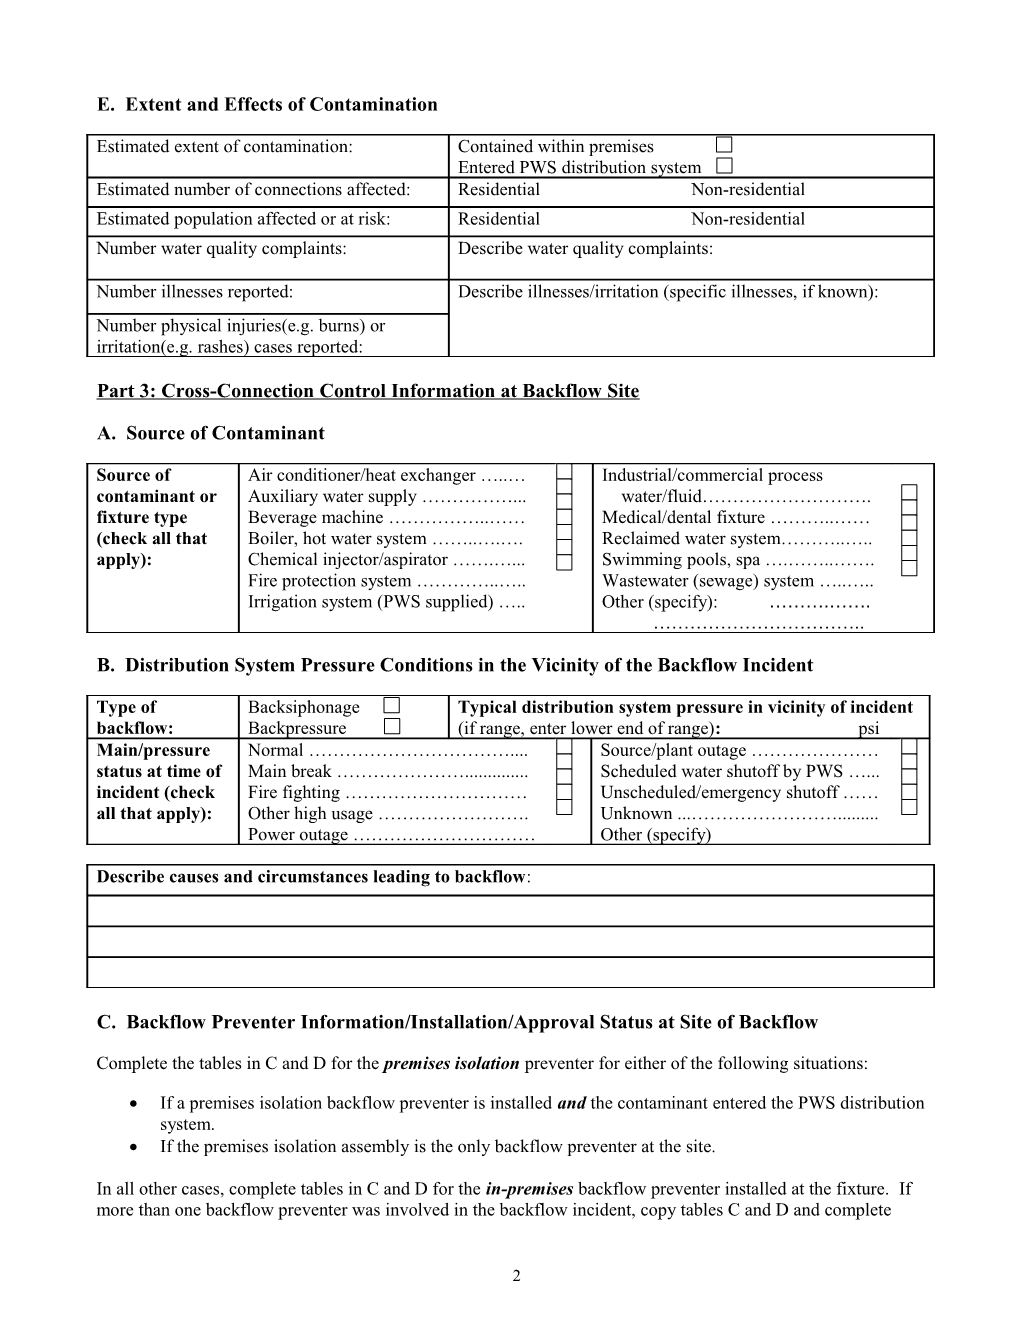 Cross-Connection Control Program: Backflow Incident Report Form